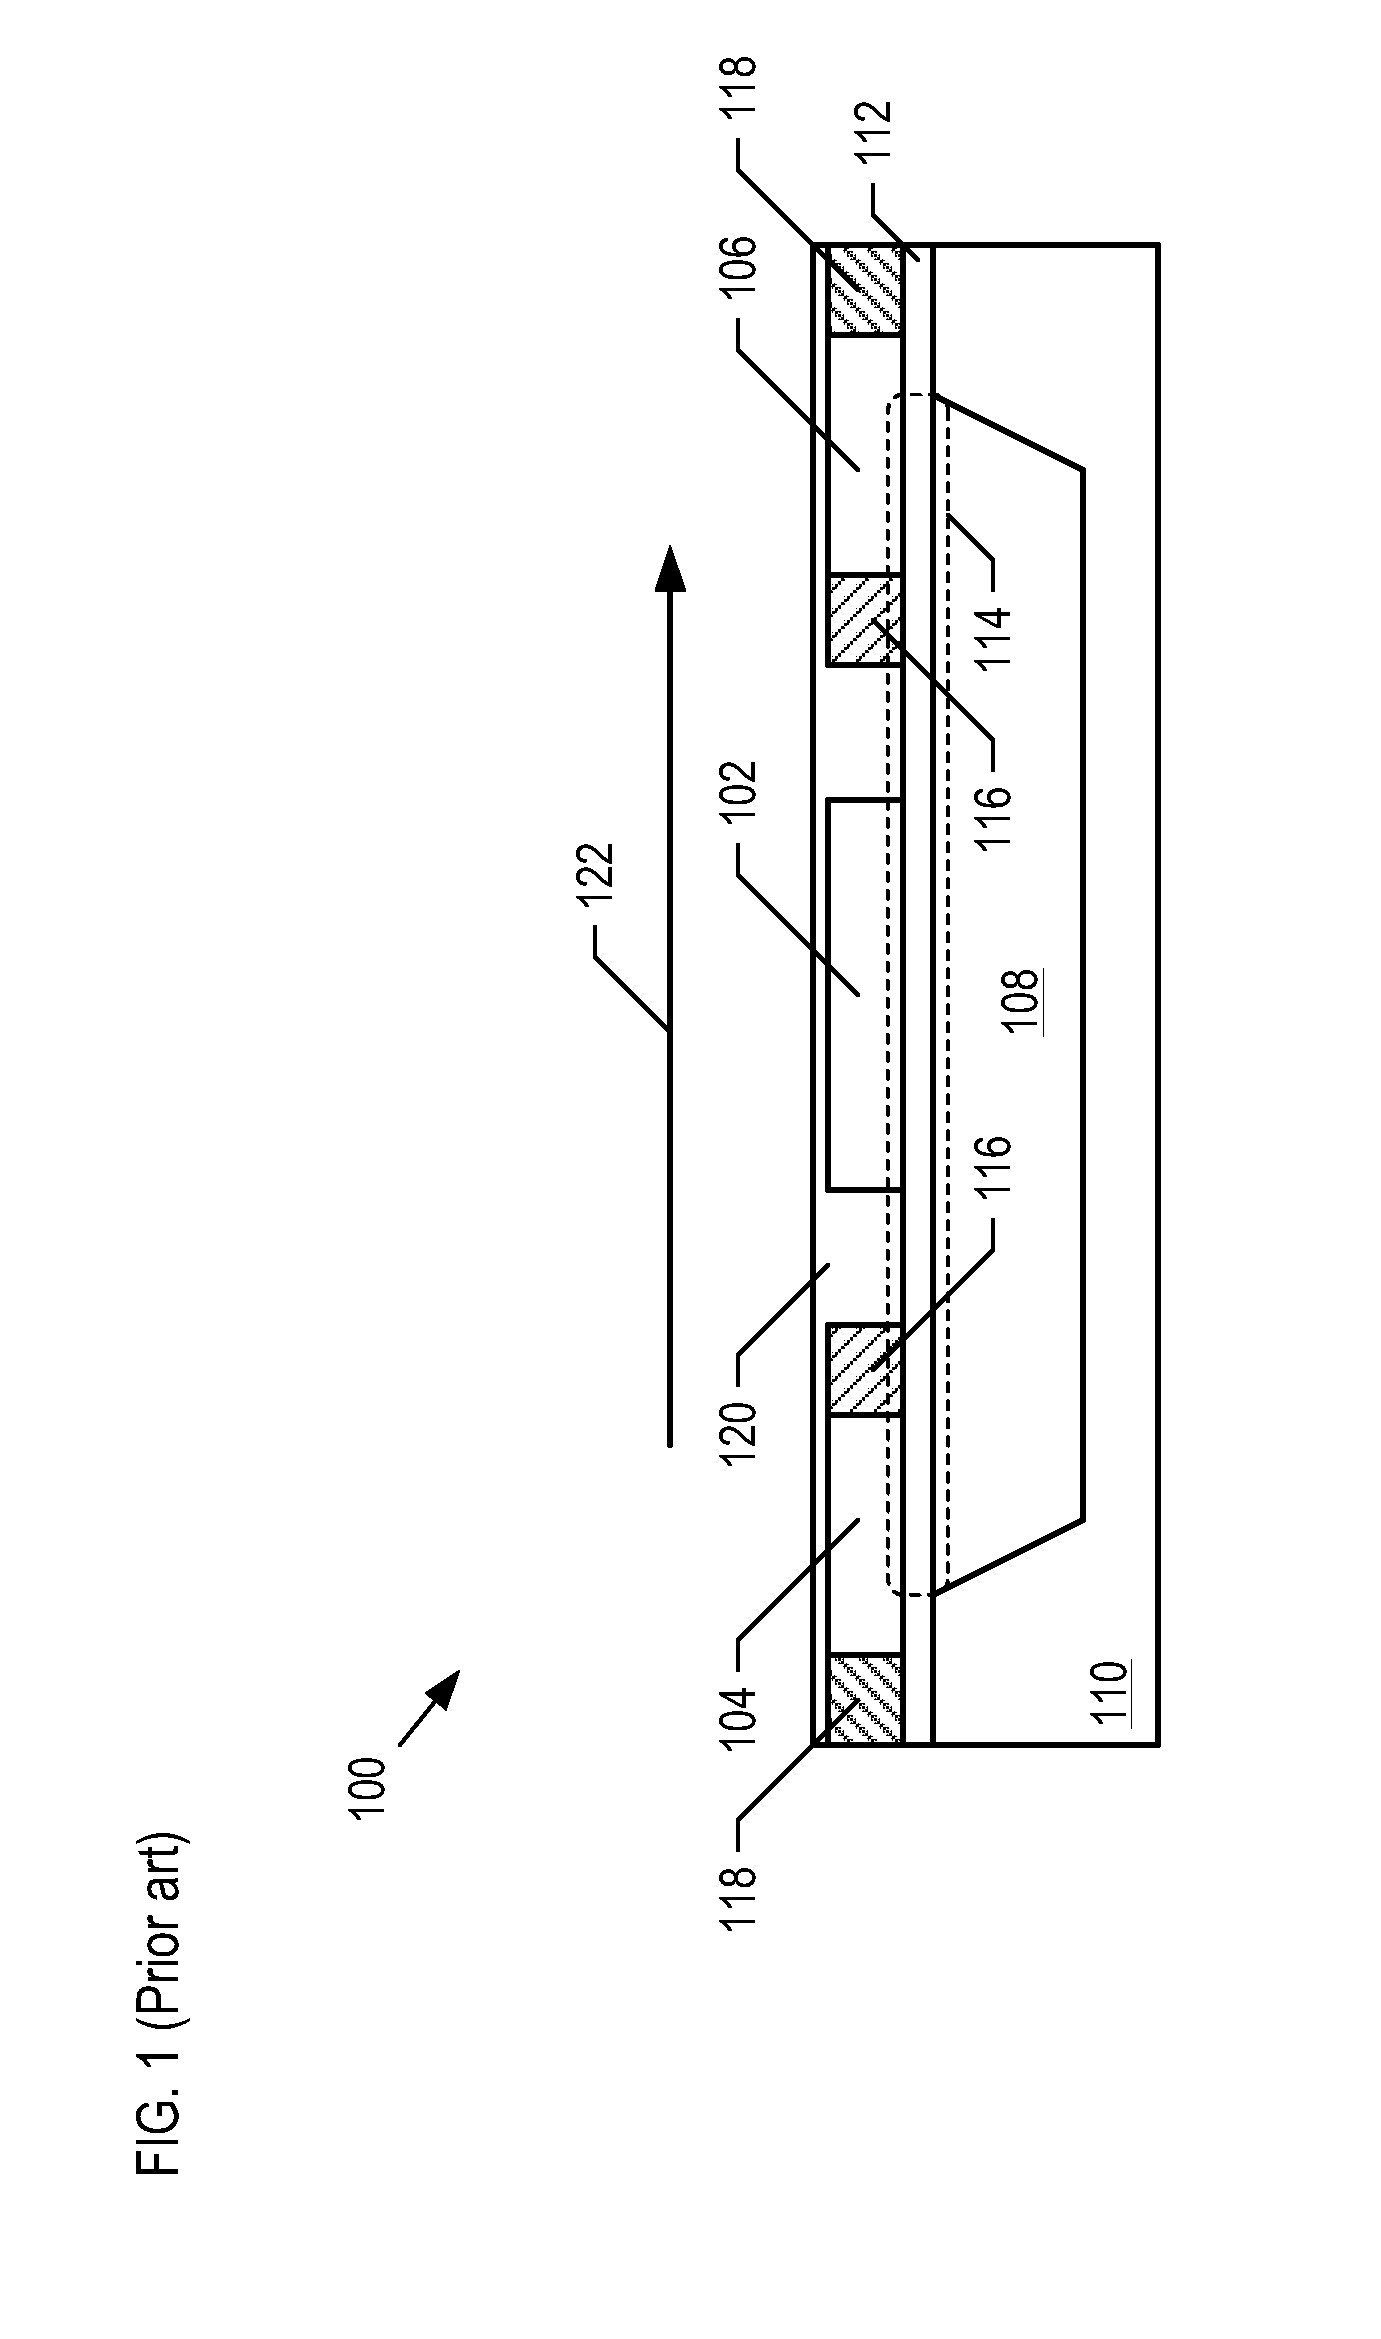 Flow Sensor and Method of Fabrication